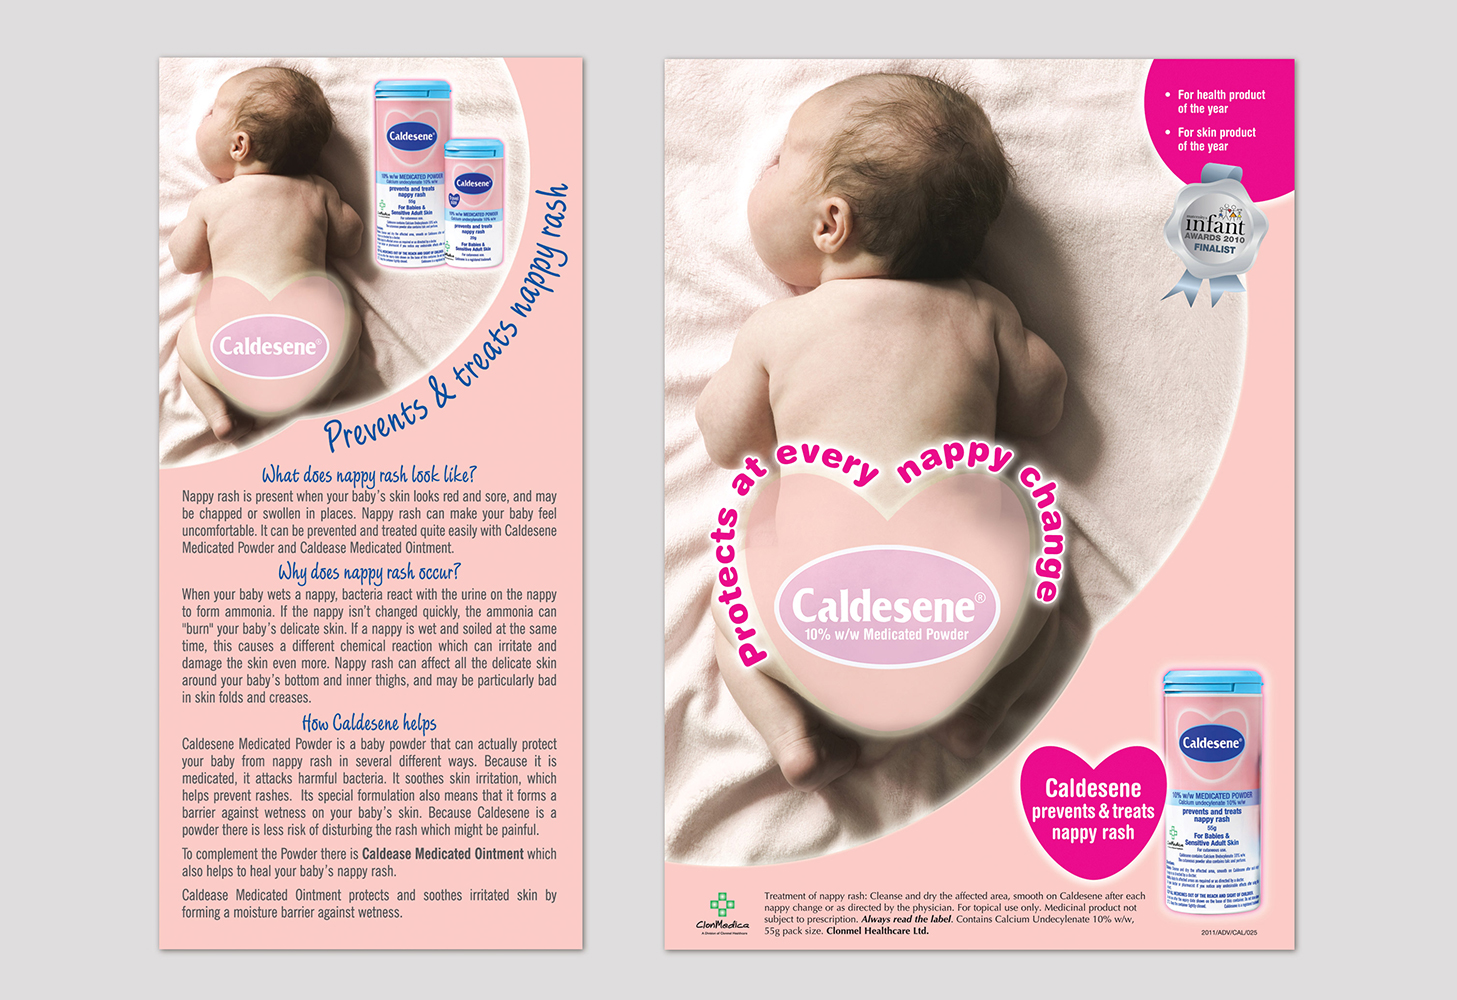 Caldesene Adverts, Leaflets, Web Banners, POS, Promotional Materials